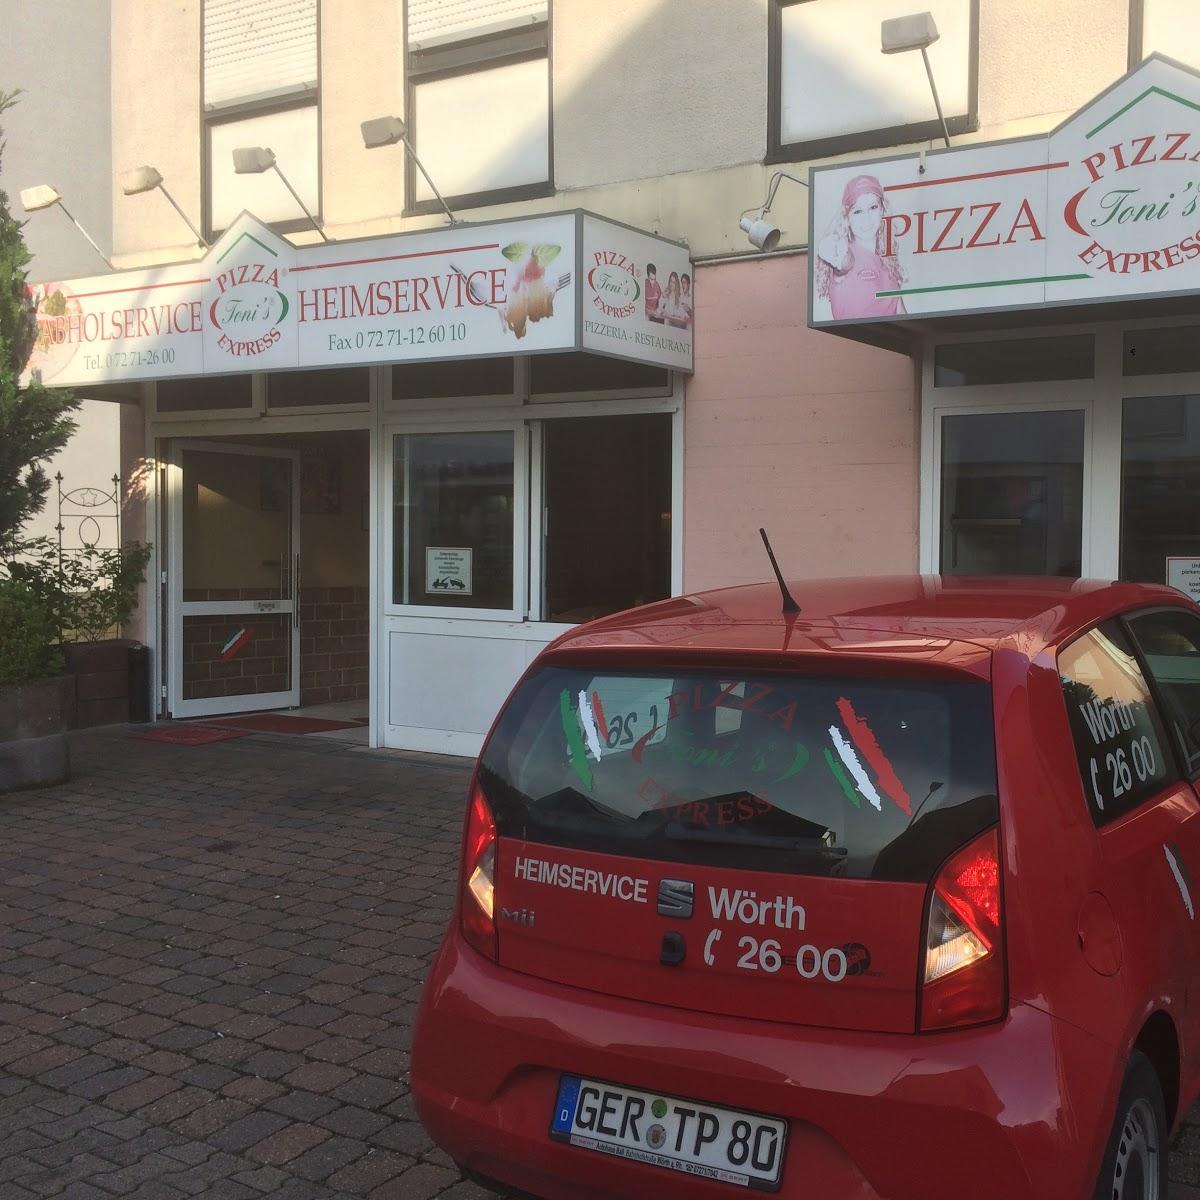 Restaurant "Toni‘s Pizza Express" in Wörth am Rhein